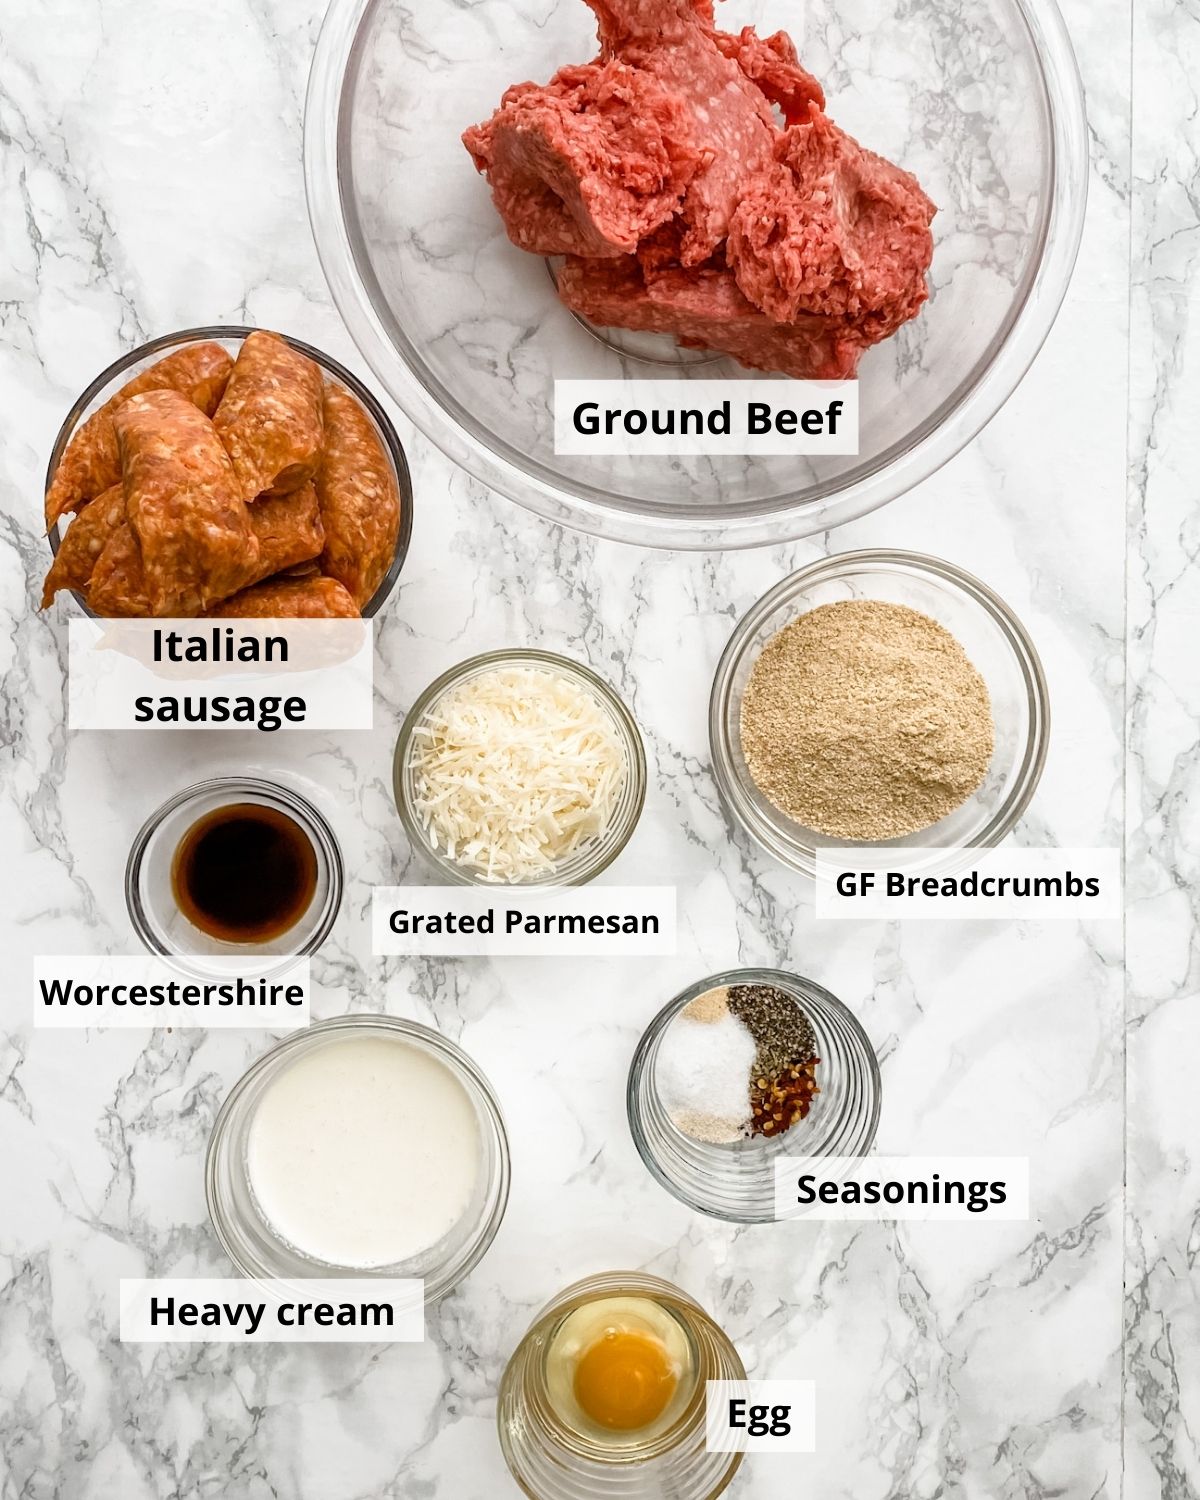 Ingredients to make GF meatballs.